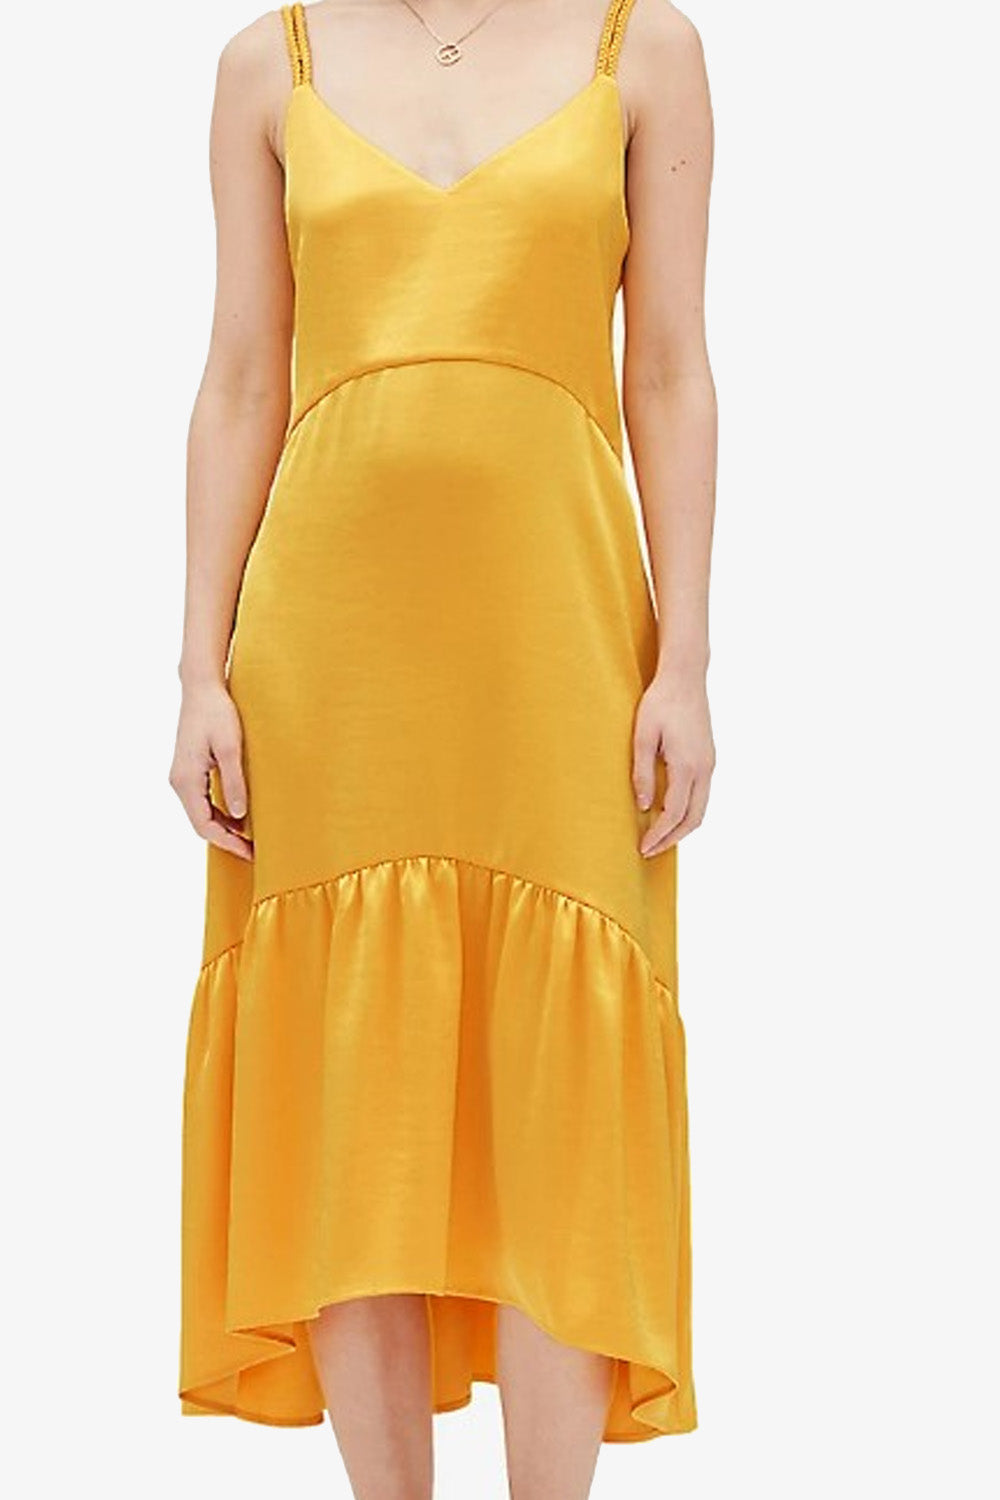 Incandescent yellow Dress